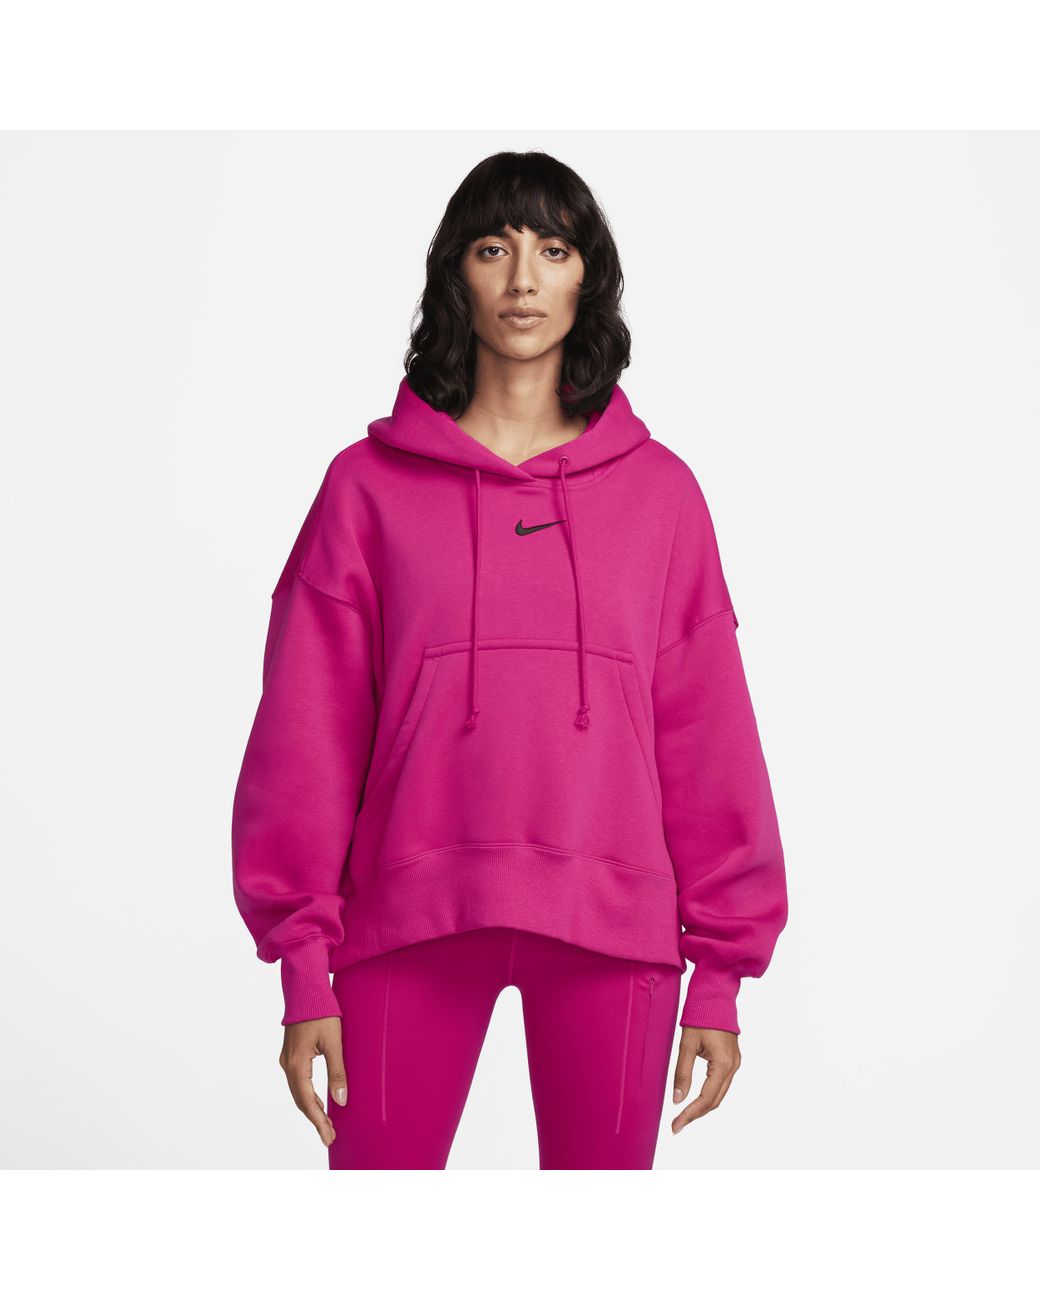 https://cdna.lystit.com/1040/1300/n/photos/nike/865f948a/nike-Pink-Sportswear-Phoenix-Fleece-Over-oversized-Pullover-Hoodie.jpeg